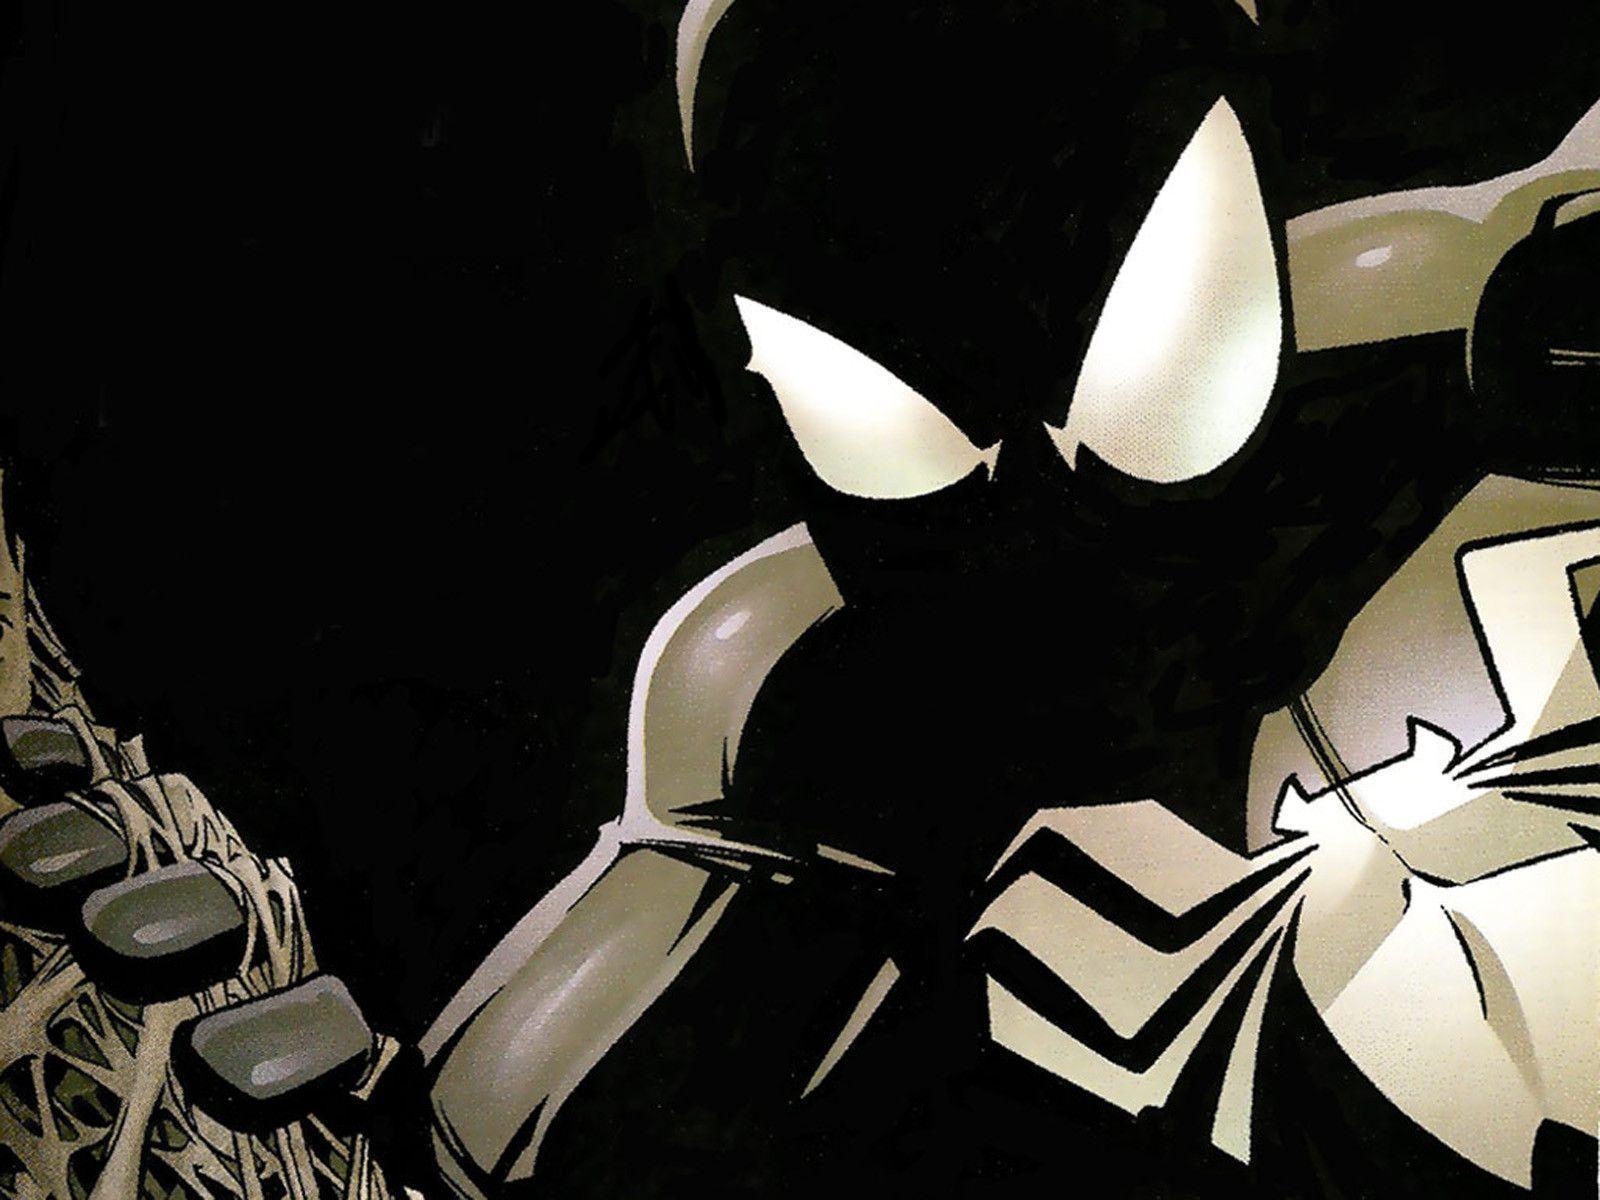 image For > Black Spiderman Wallpaper